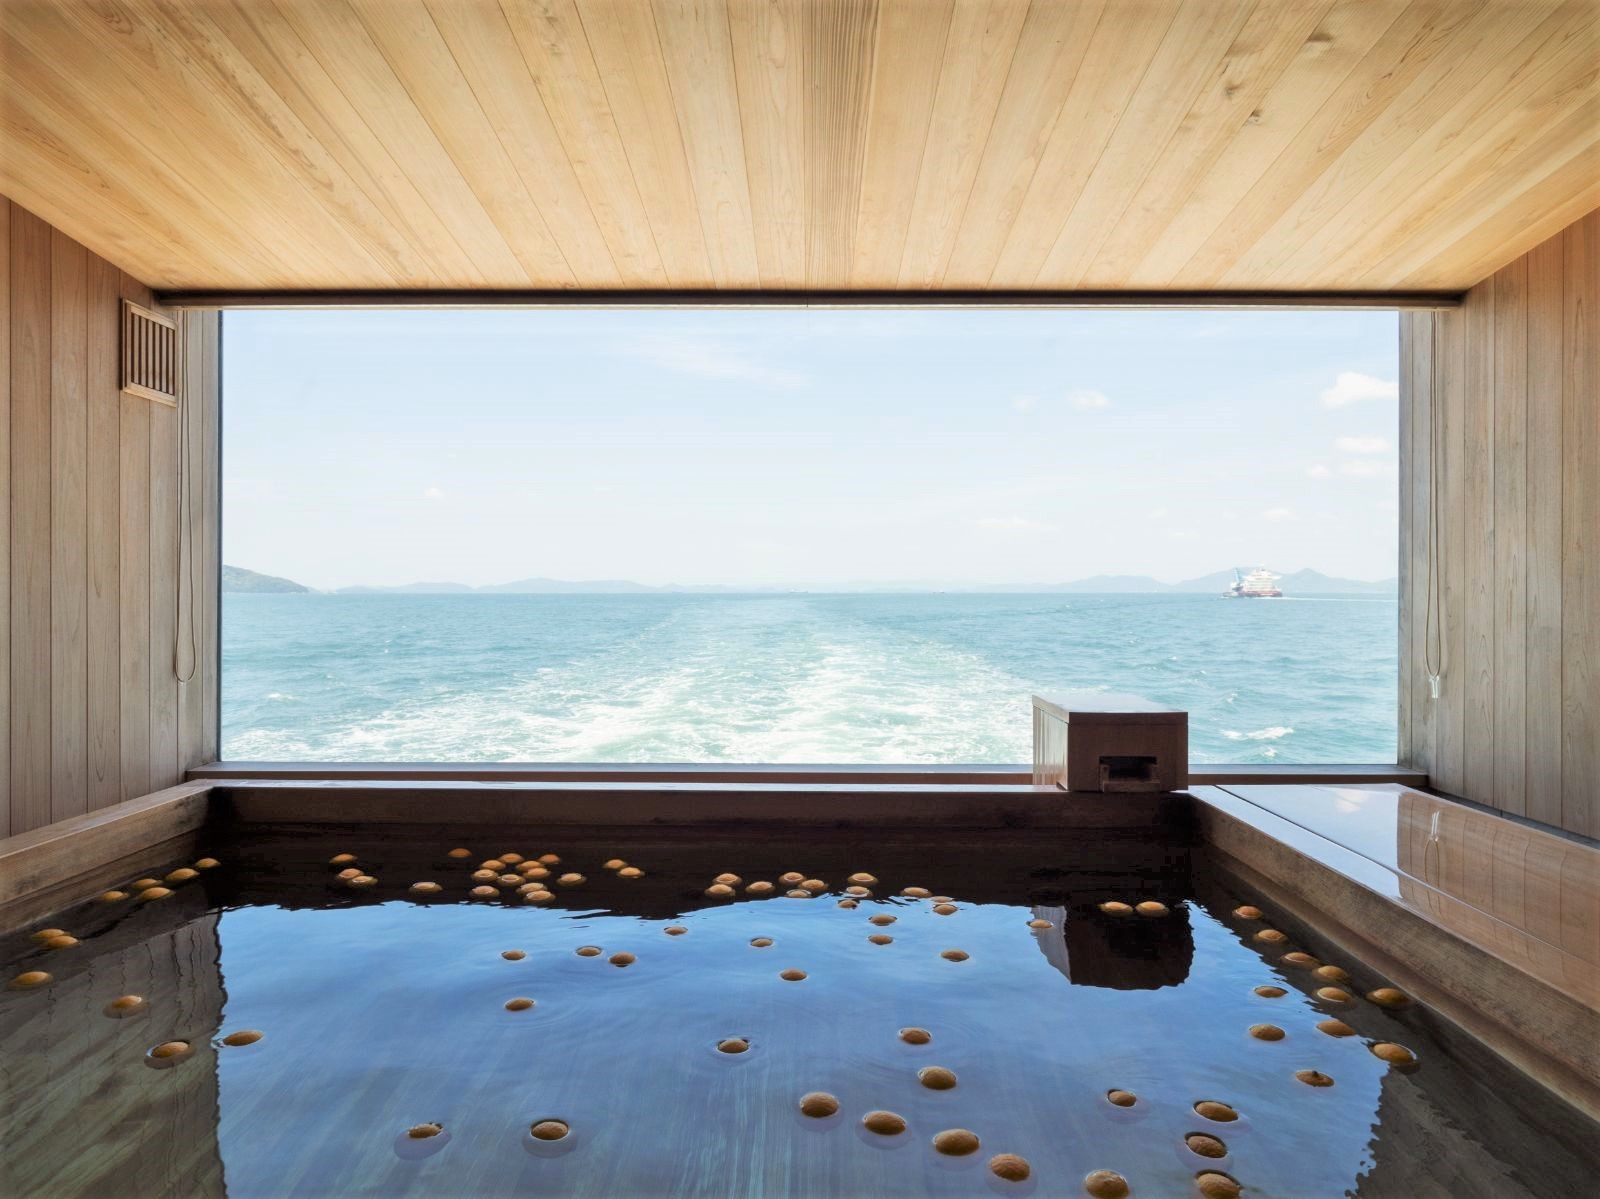 Communal bath overlooking the Seto Inland Sea onboard guntû in Japan